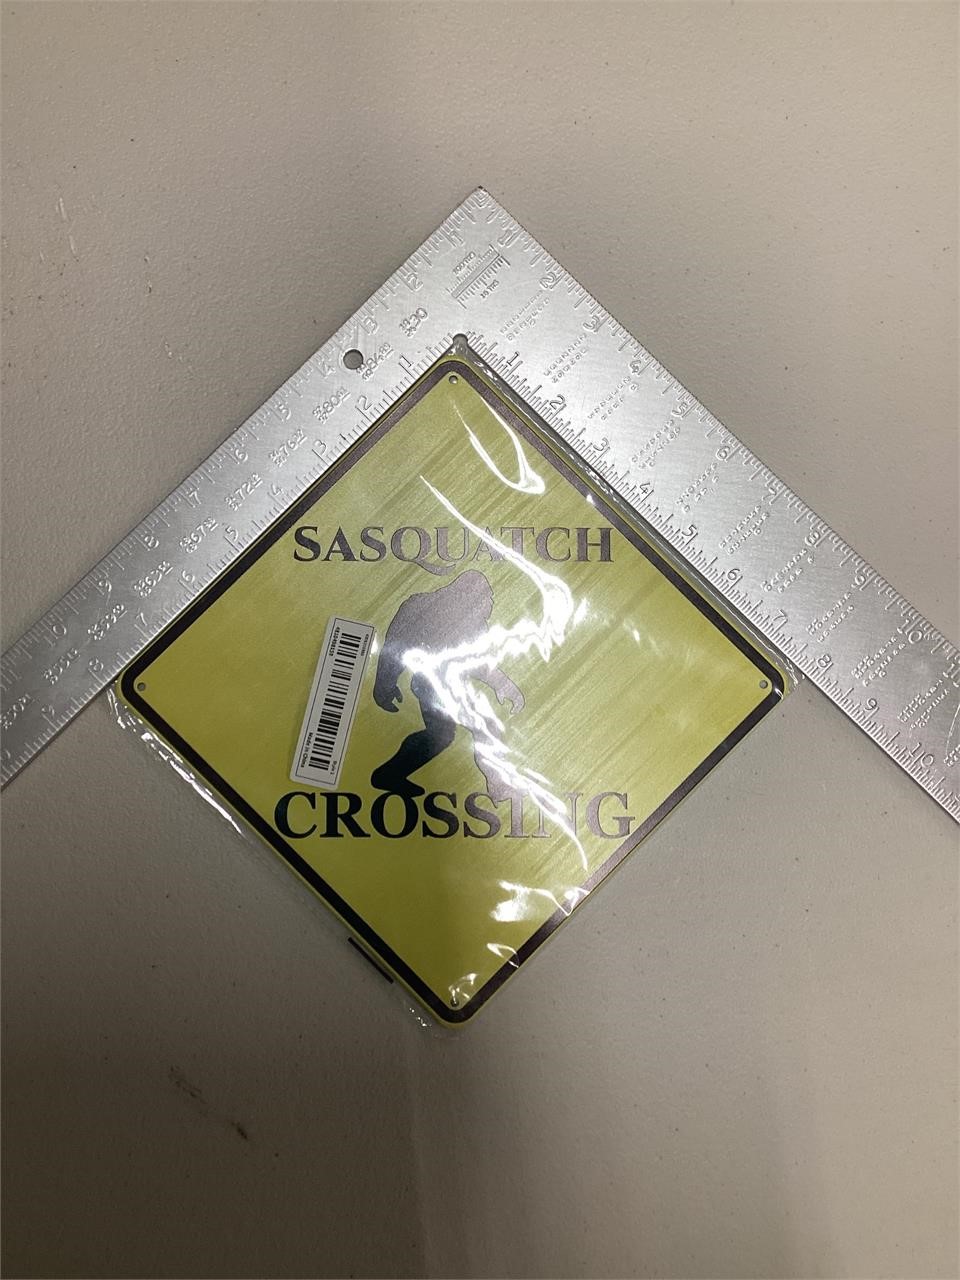 8x8in. Sasquatch crossing metal sign